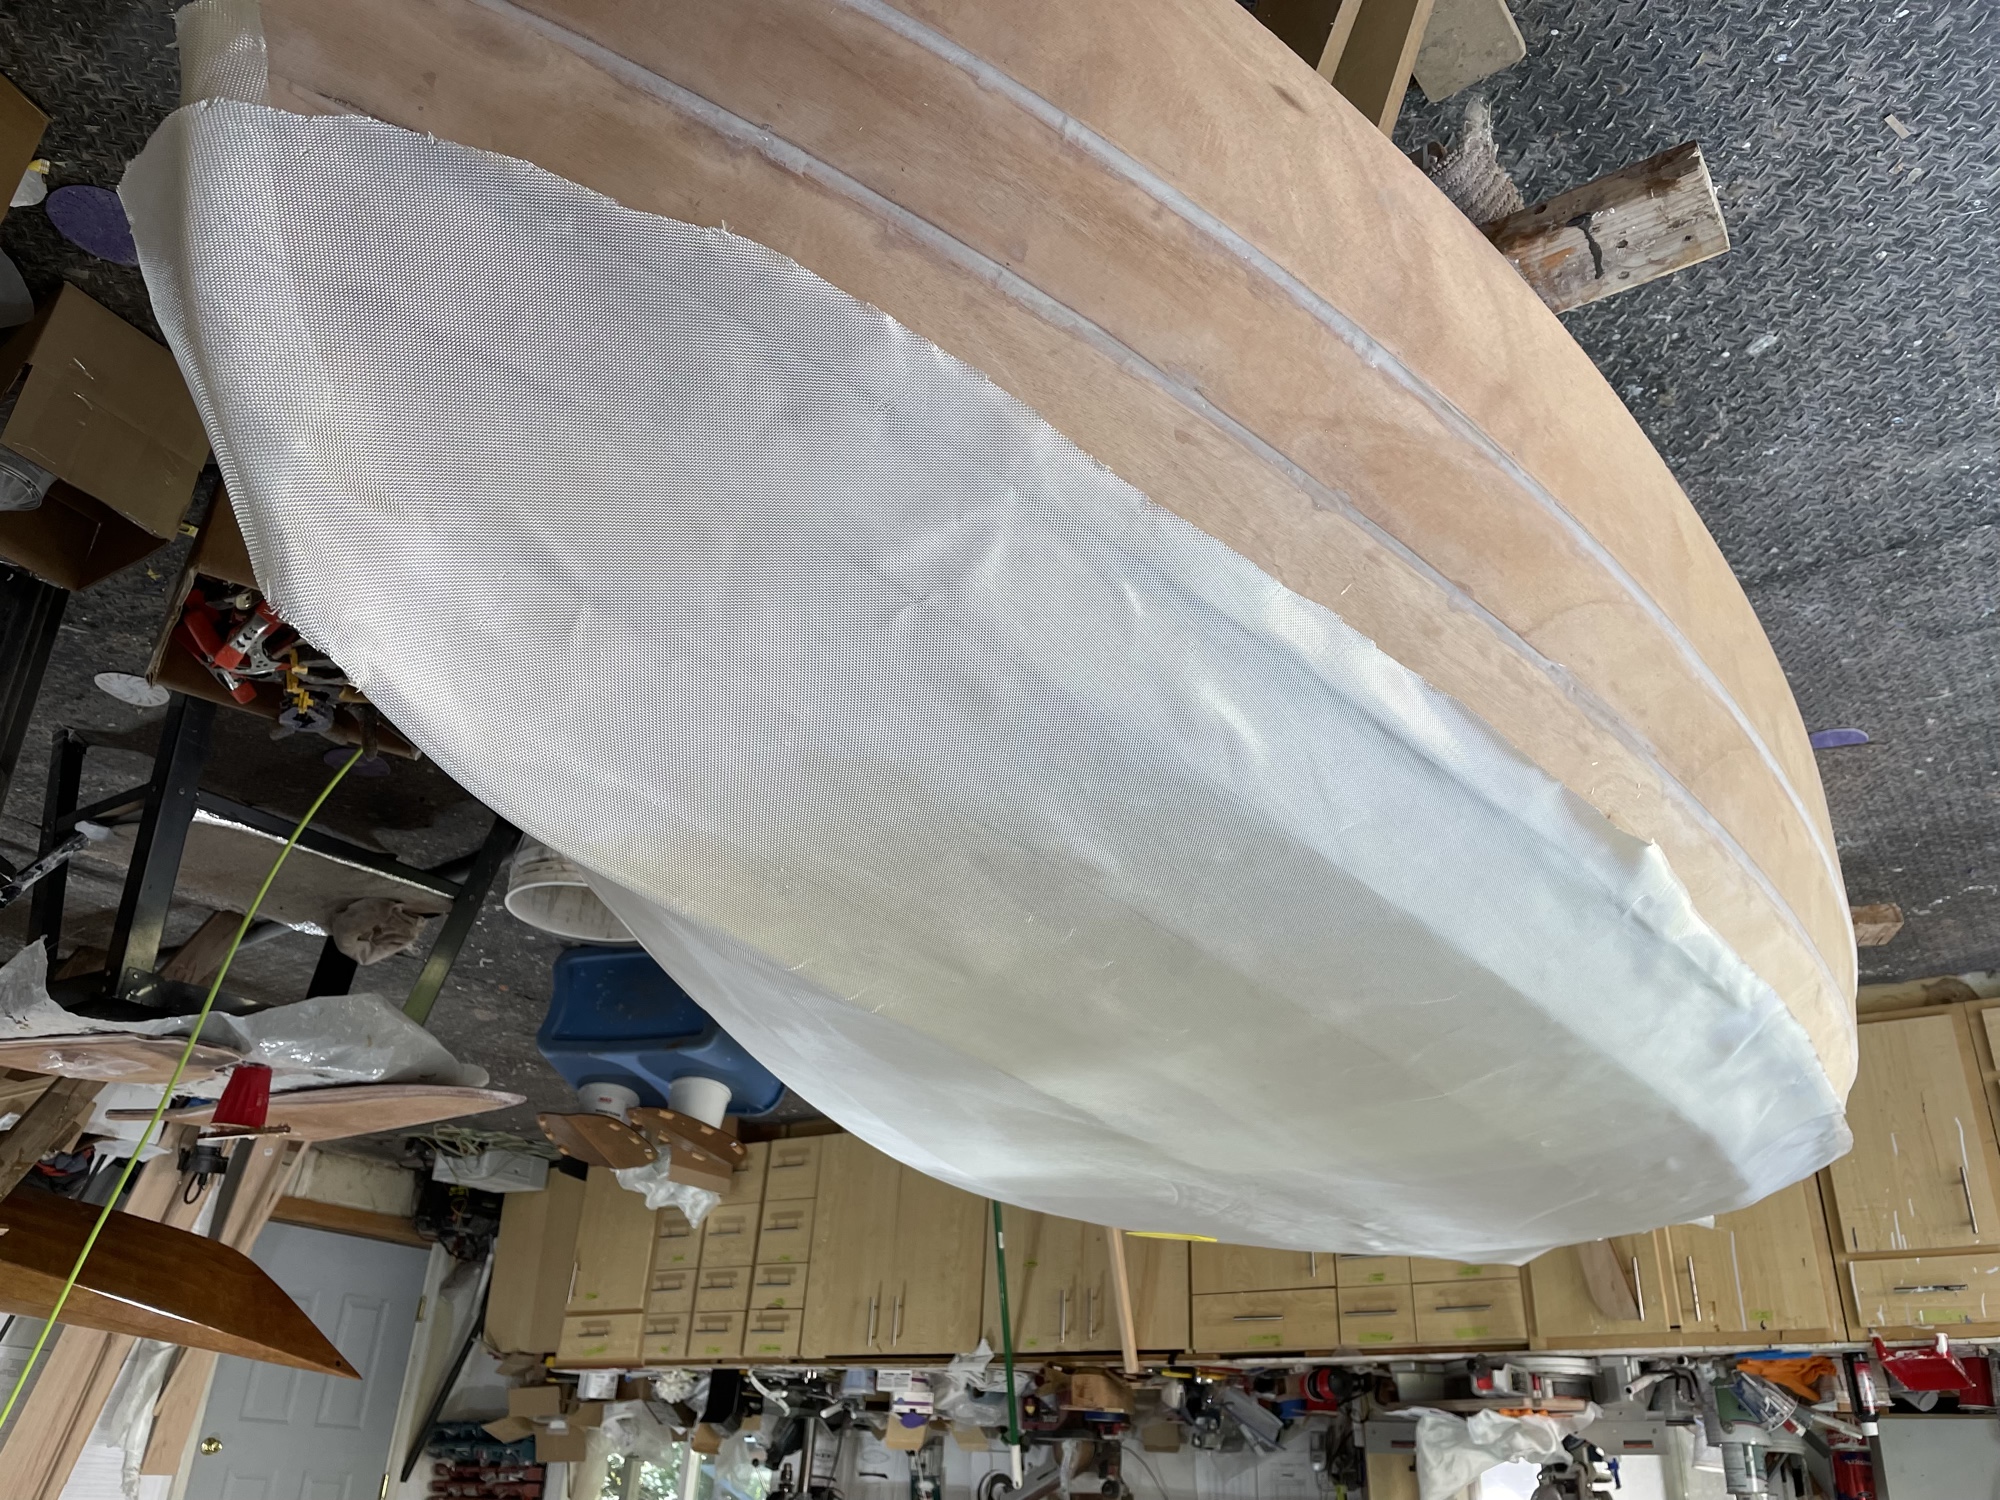  Fiberglass cloth is laid on the hull. 